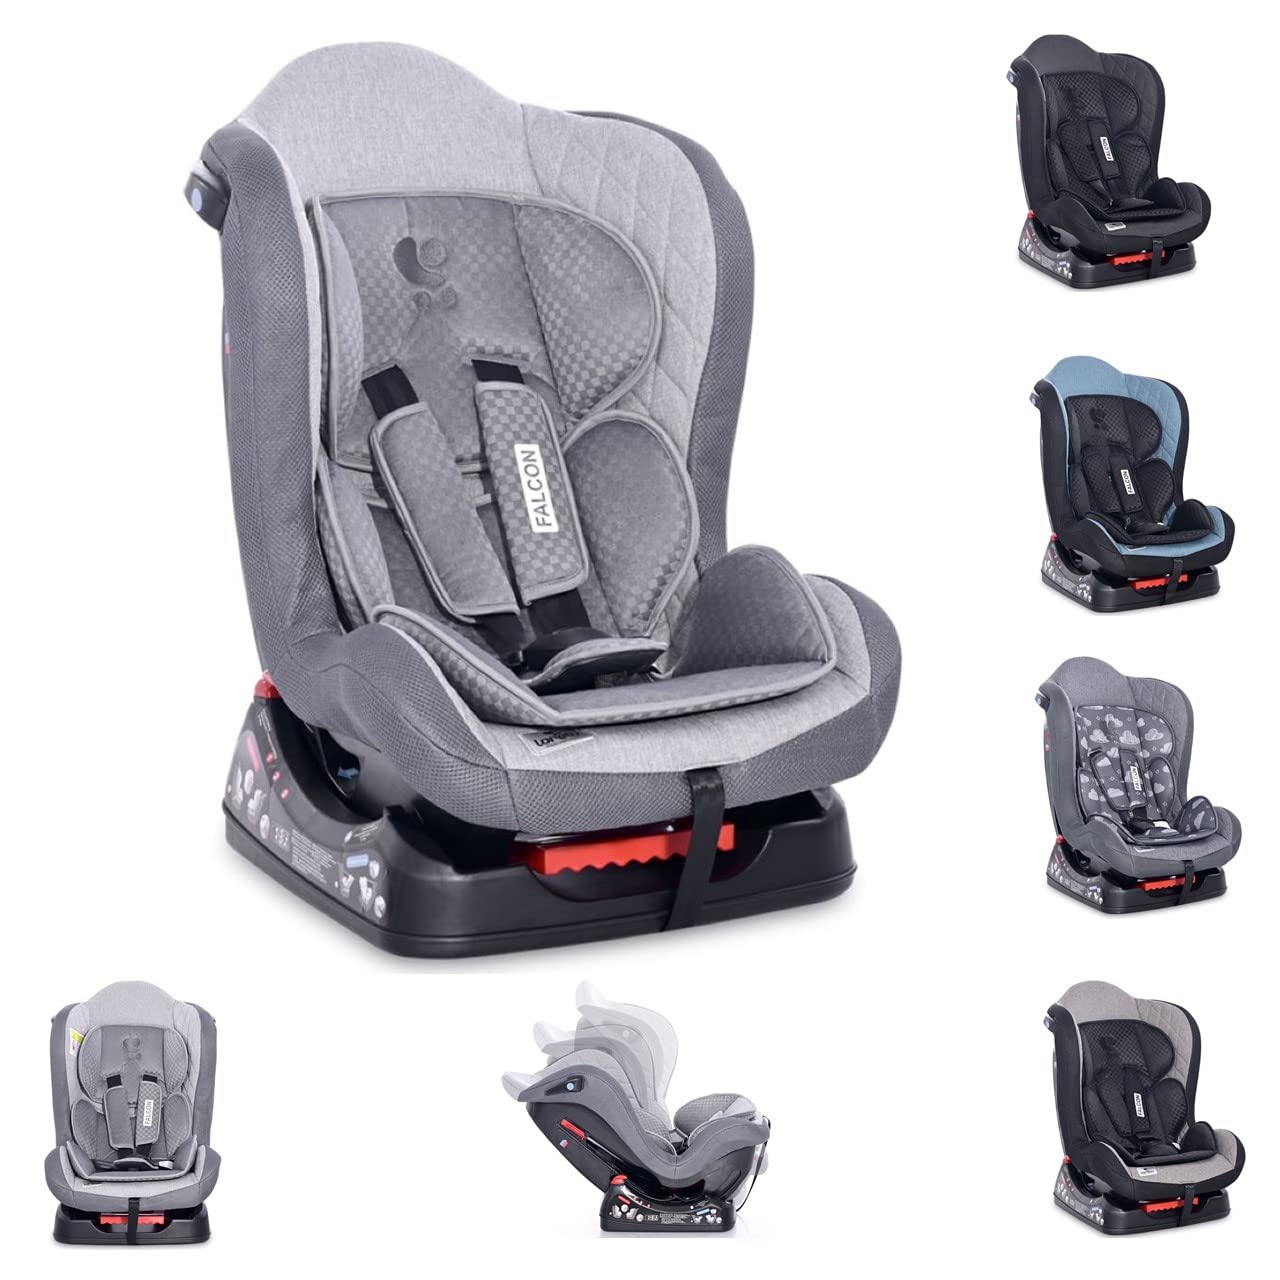 Lorelli Falcon Child Seat Group 0+/1 (0-18 kg) Reboard Adjustable Backrest Colour: Dark Grey